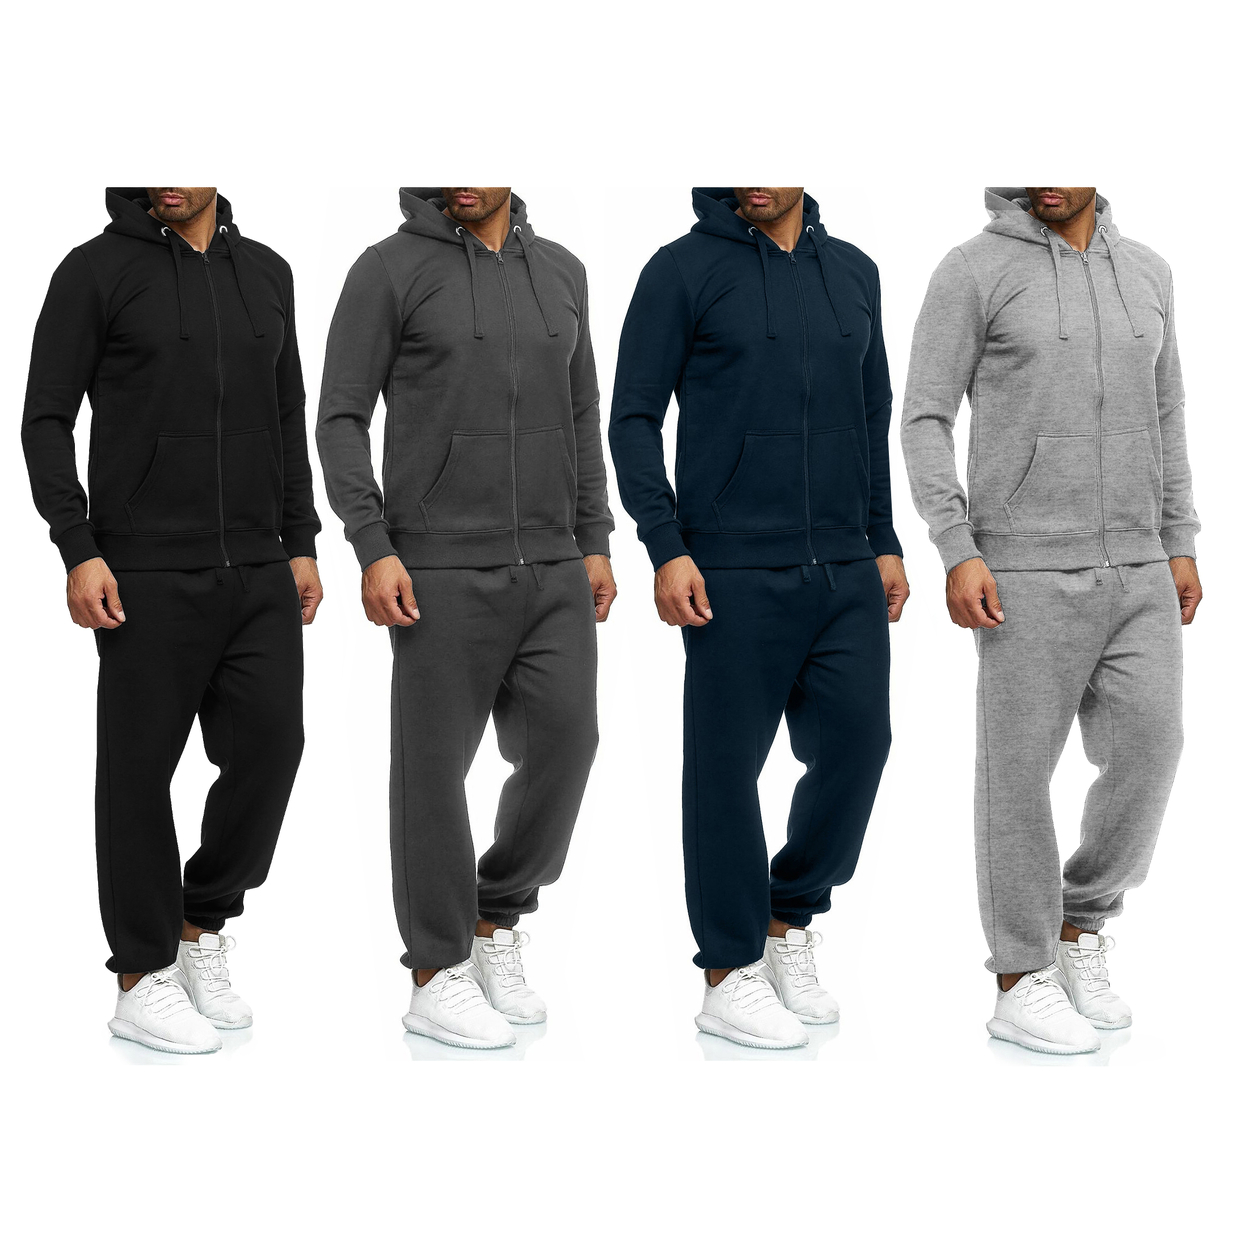 2/4-Piece: Men's Winter Warm Cozy Athletic Multi-Pockets BIG & TALL Sweatsuit Set - Grey, 2, Xx-large